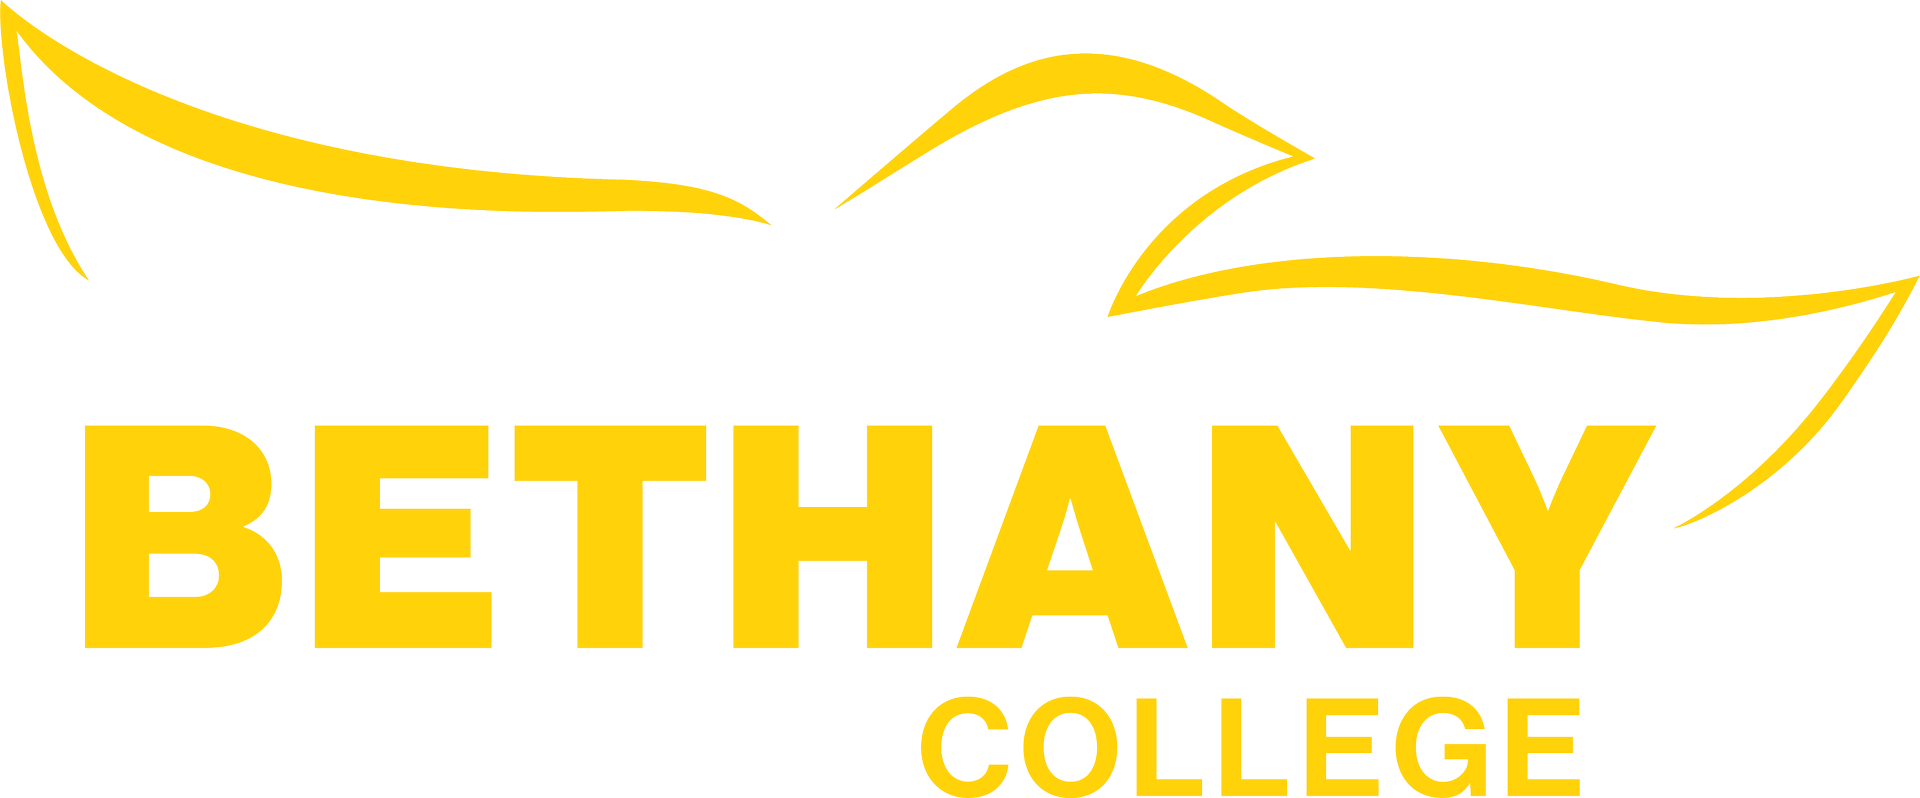 Bethany College Summer Instrumental Music Camp logo